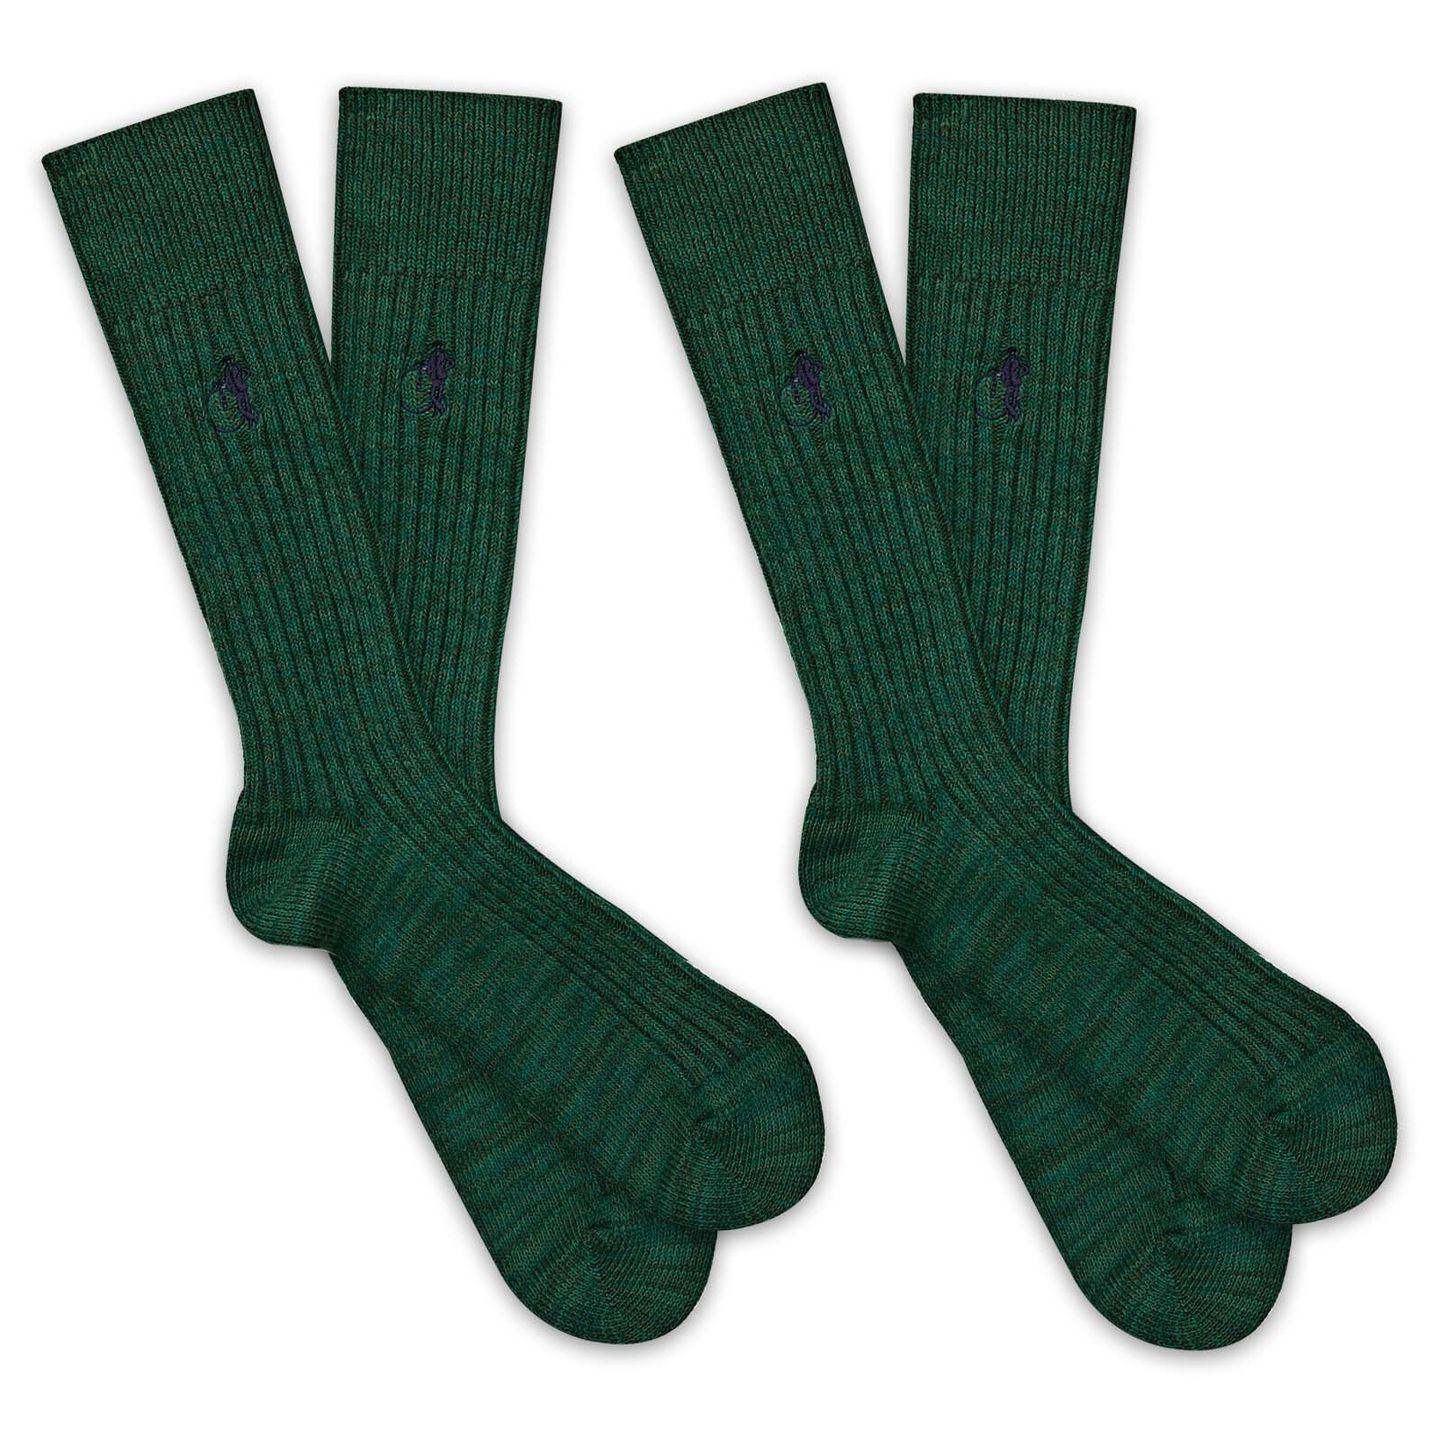 2 pair bundle of evergreen boot socks